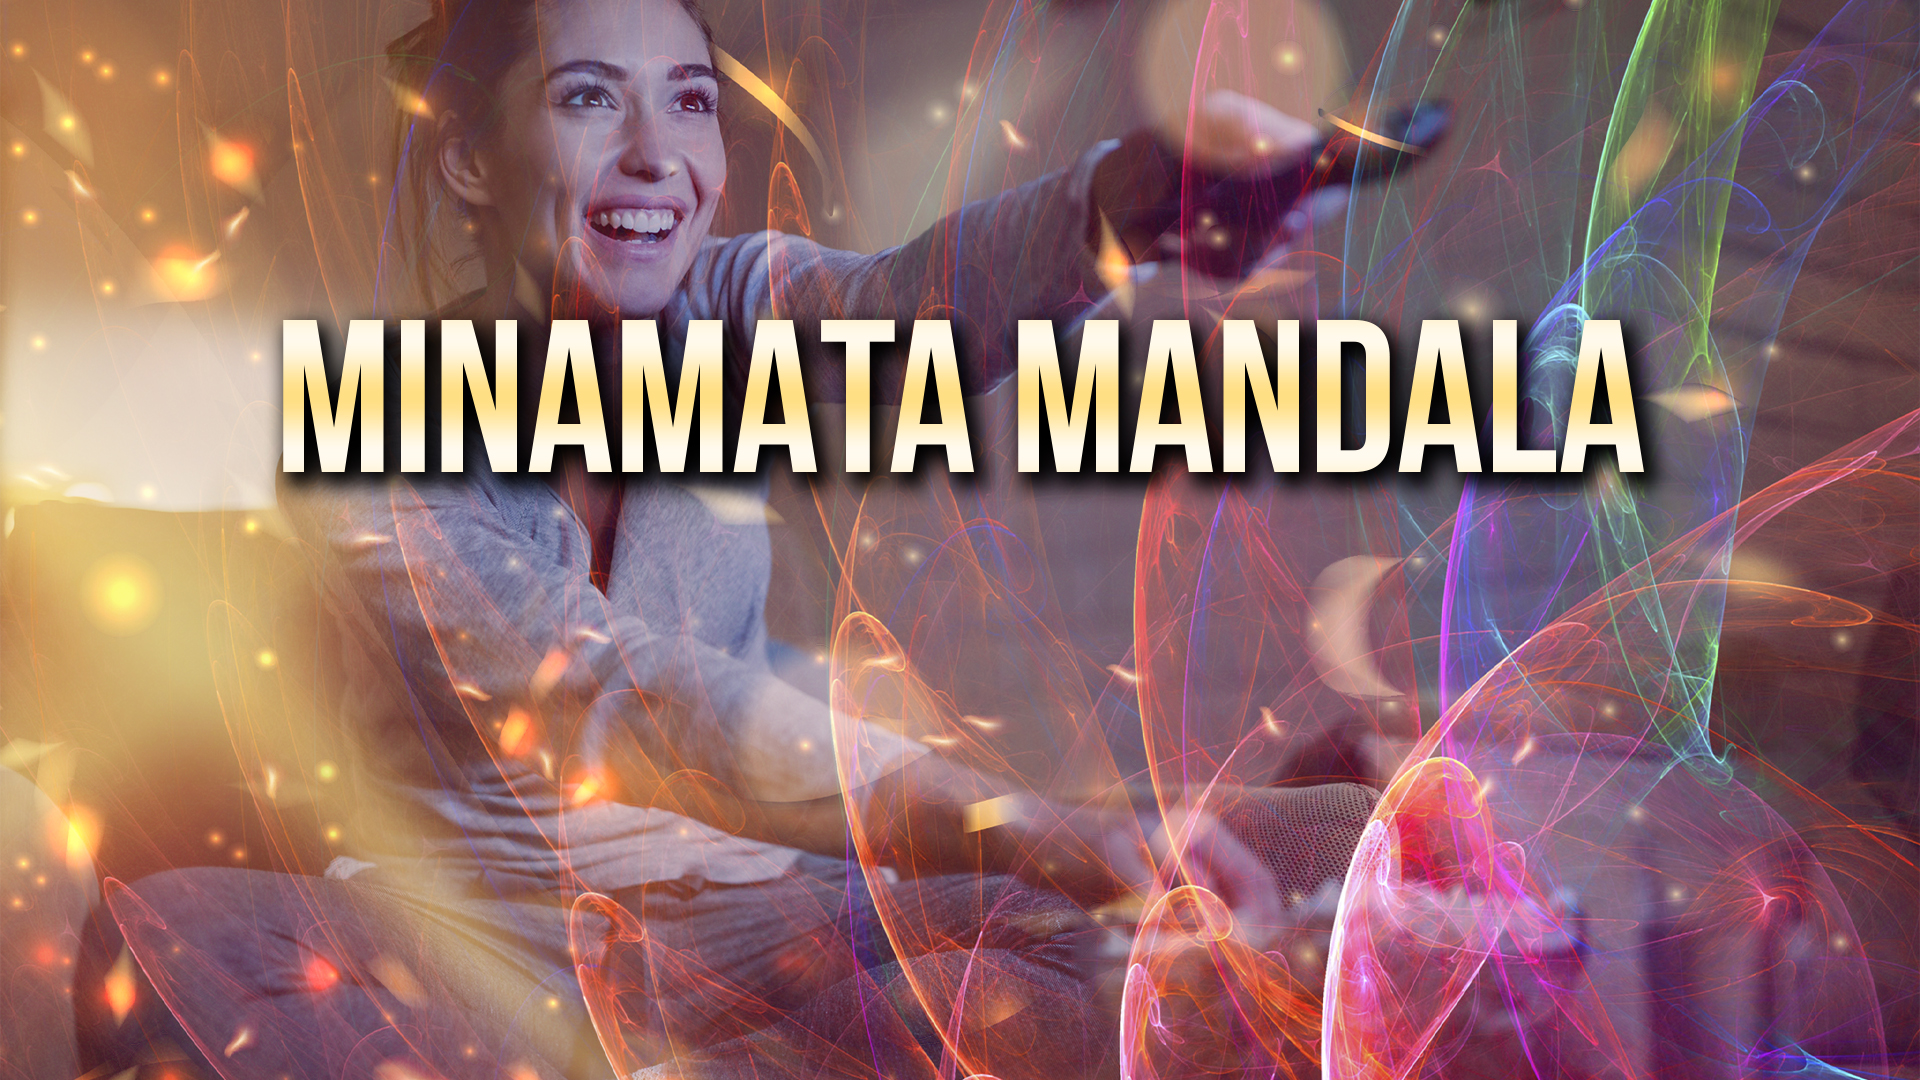 Minamata Mandala Ending Explained [SPOILER!]